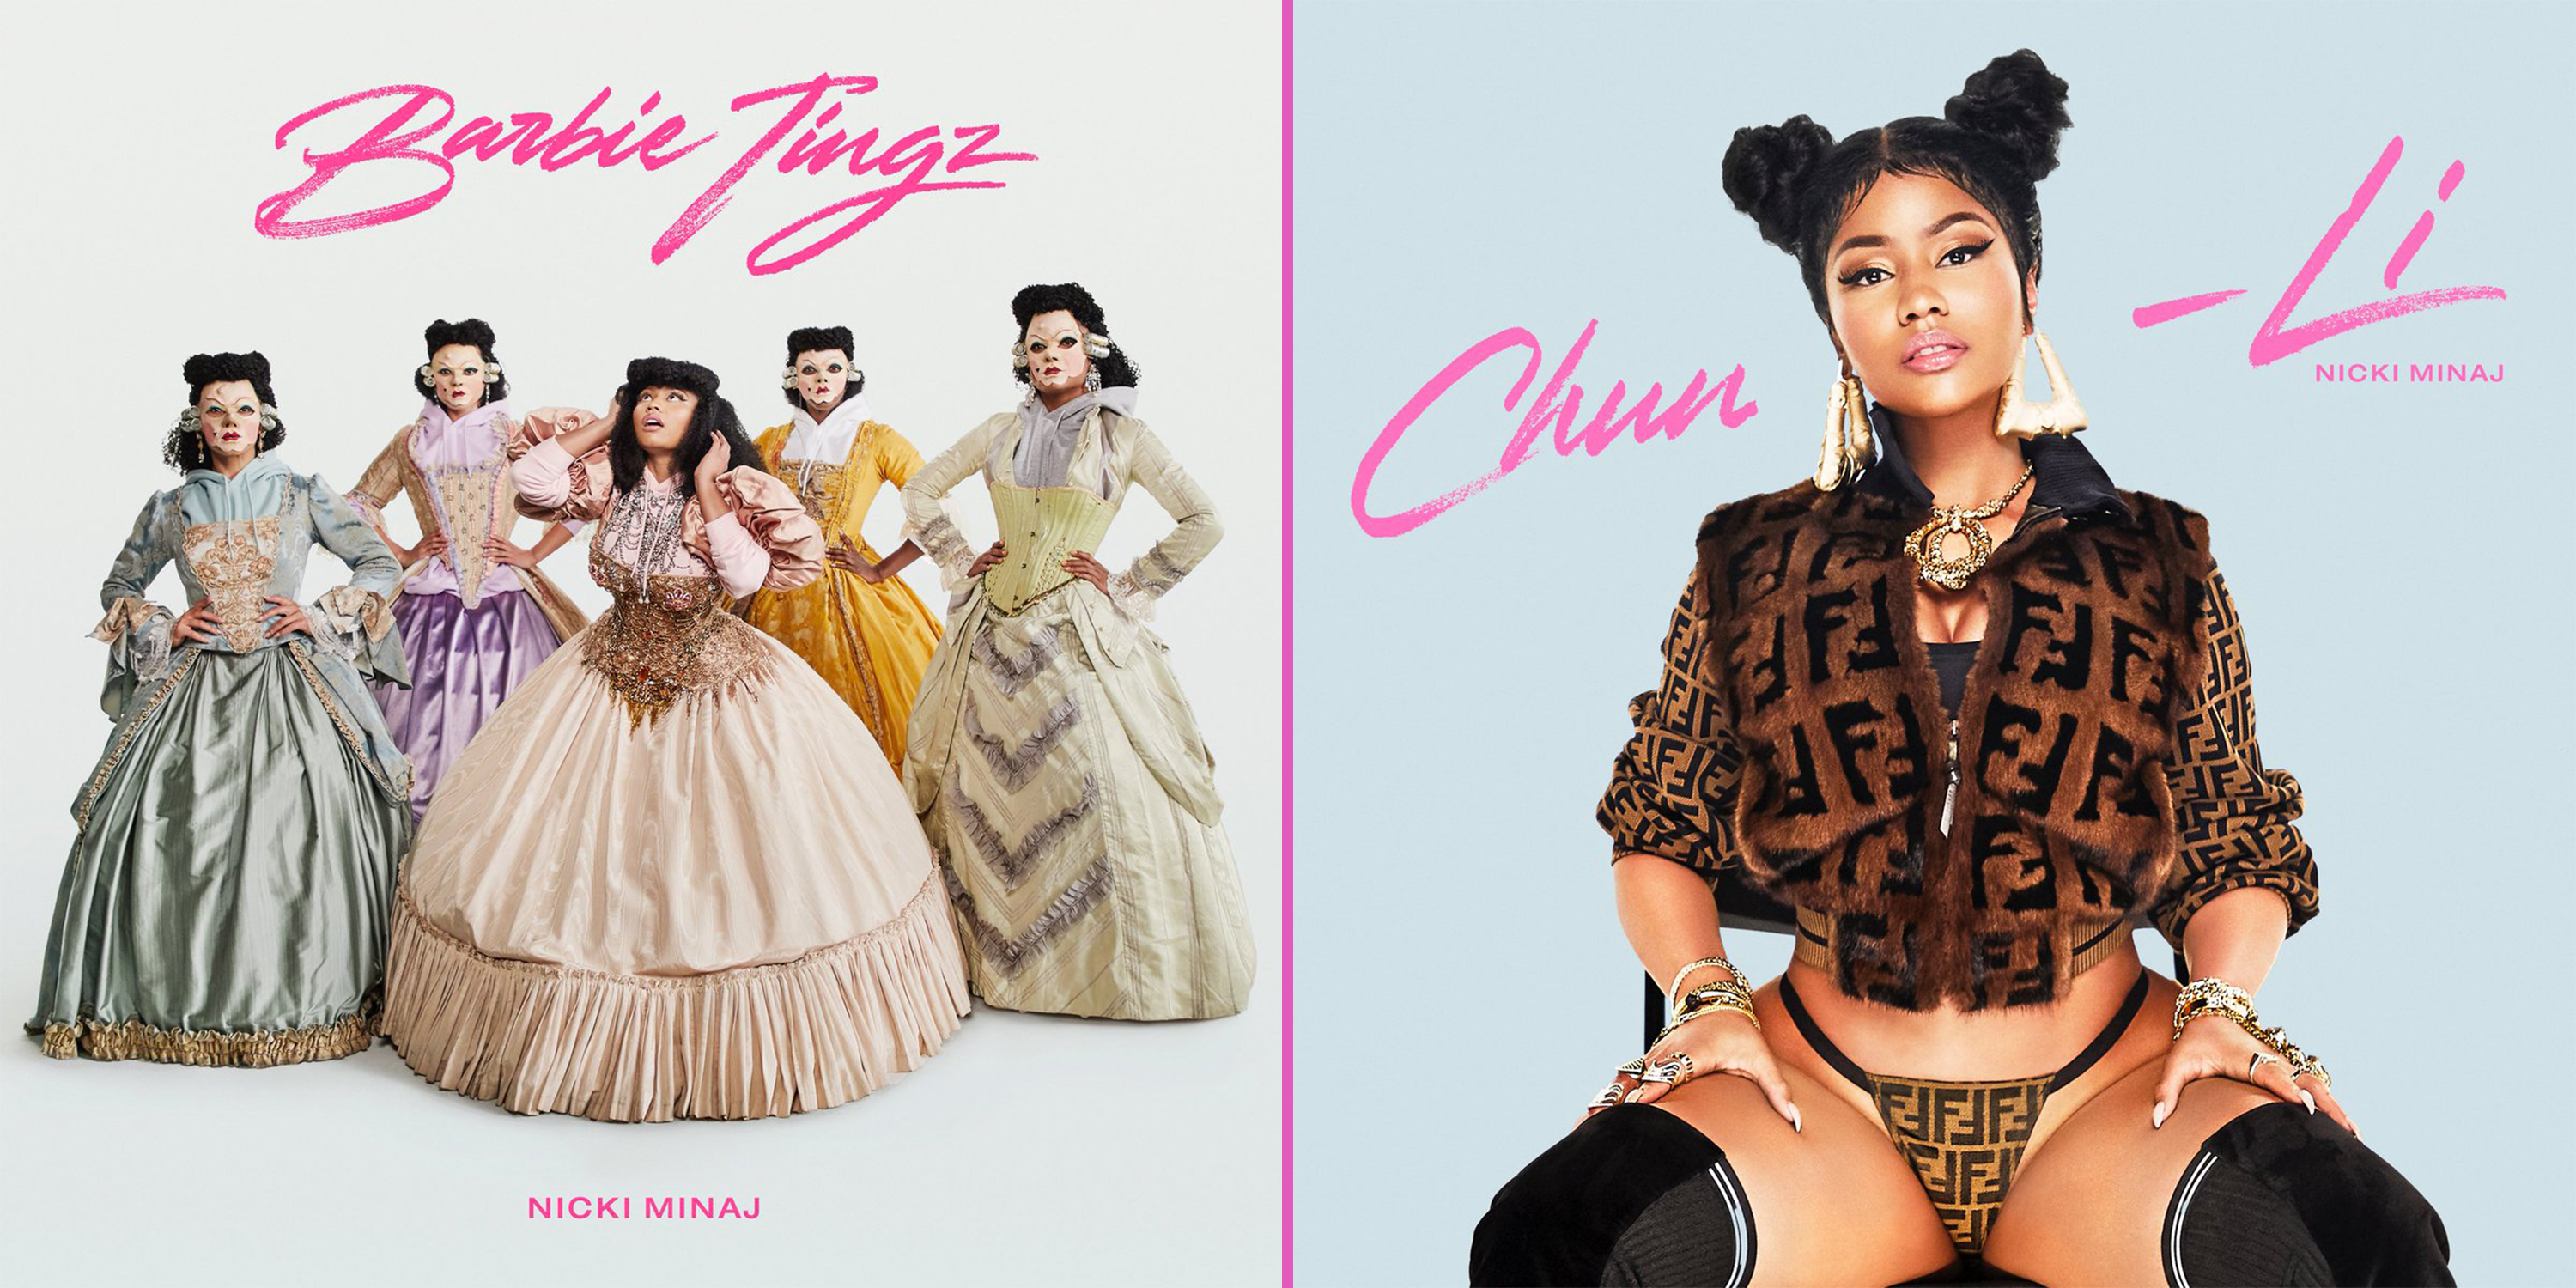 Nicki Minaj S Barbie Tingz Chun Li Debut On Hot 100